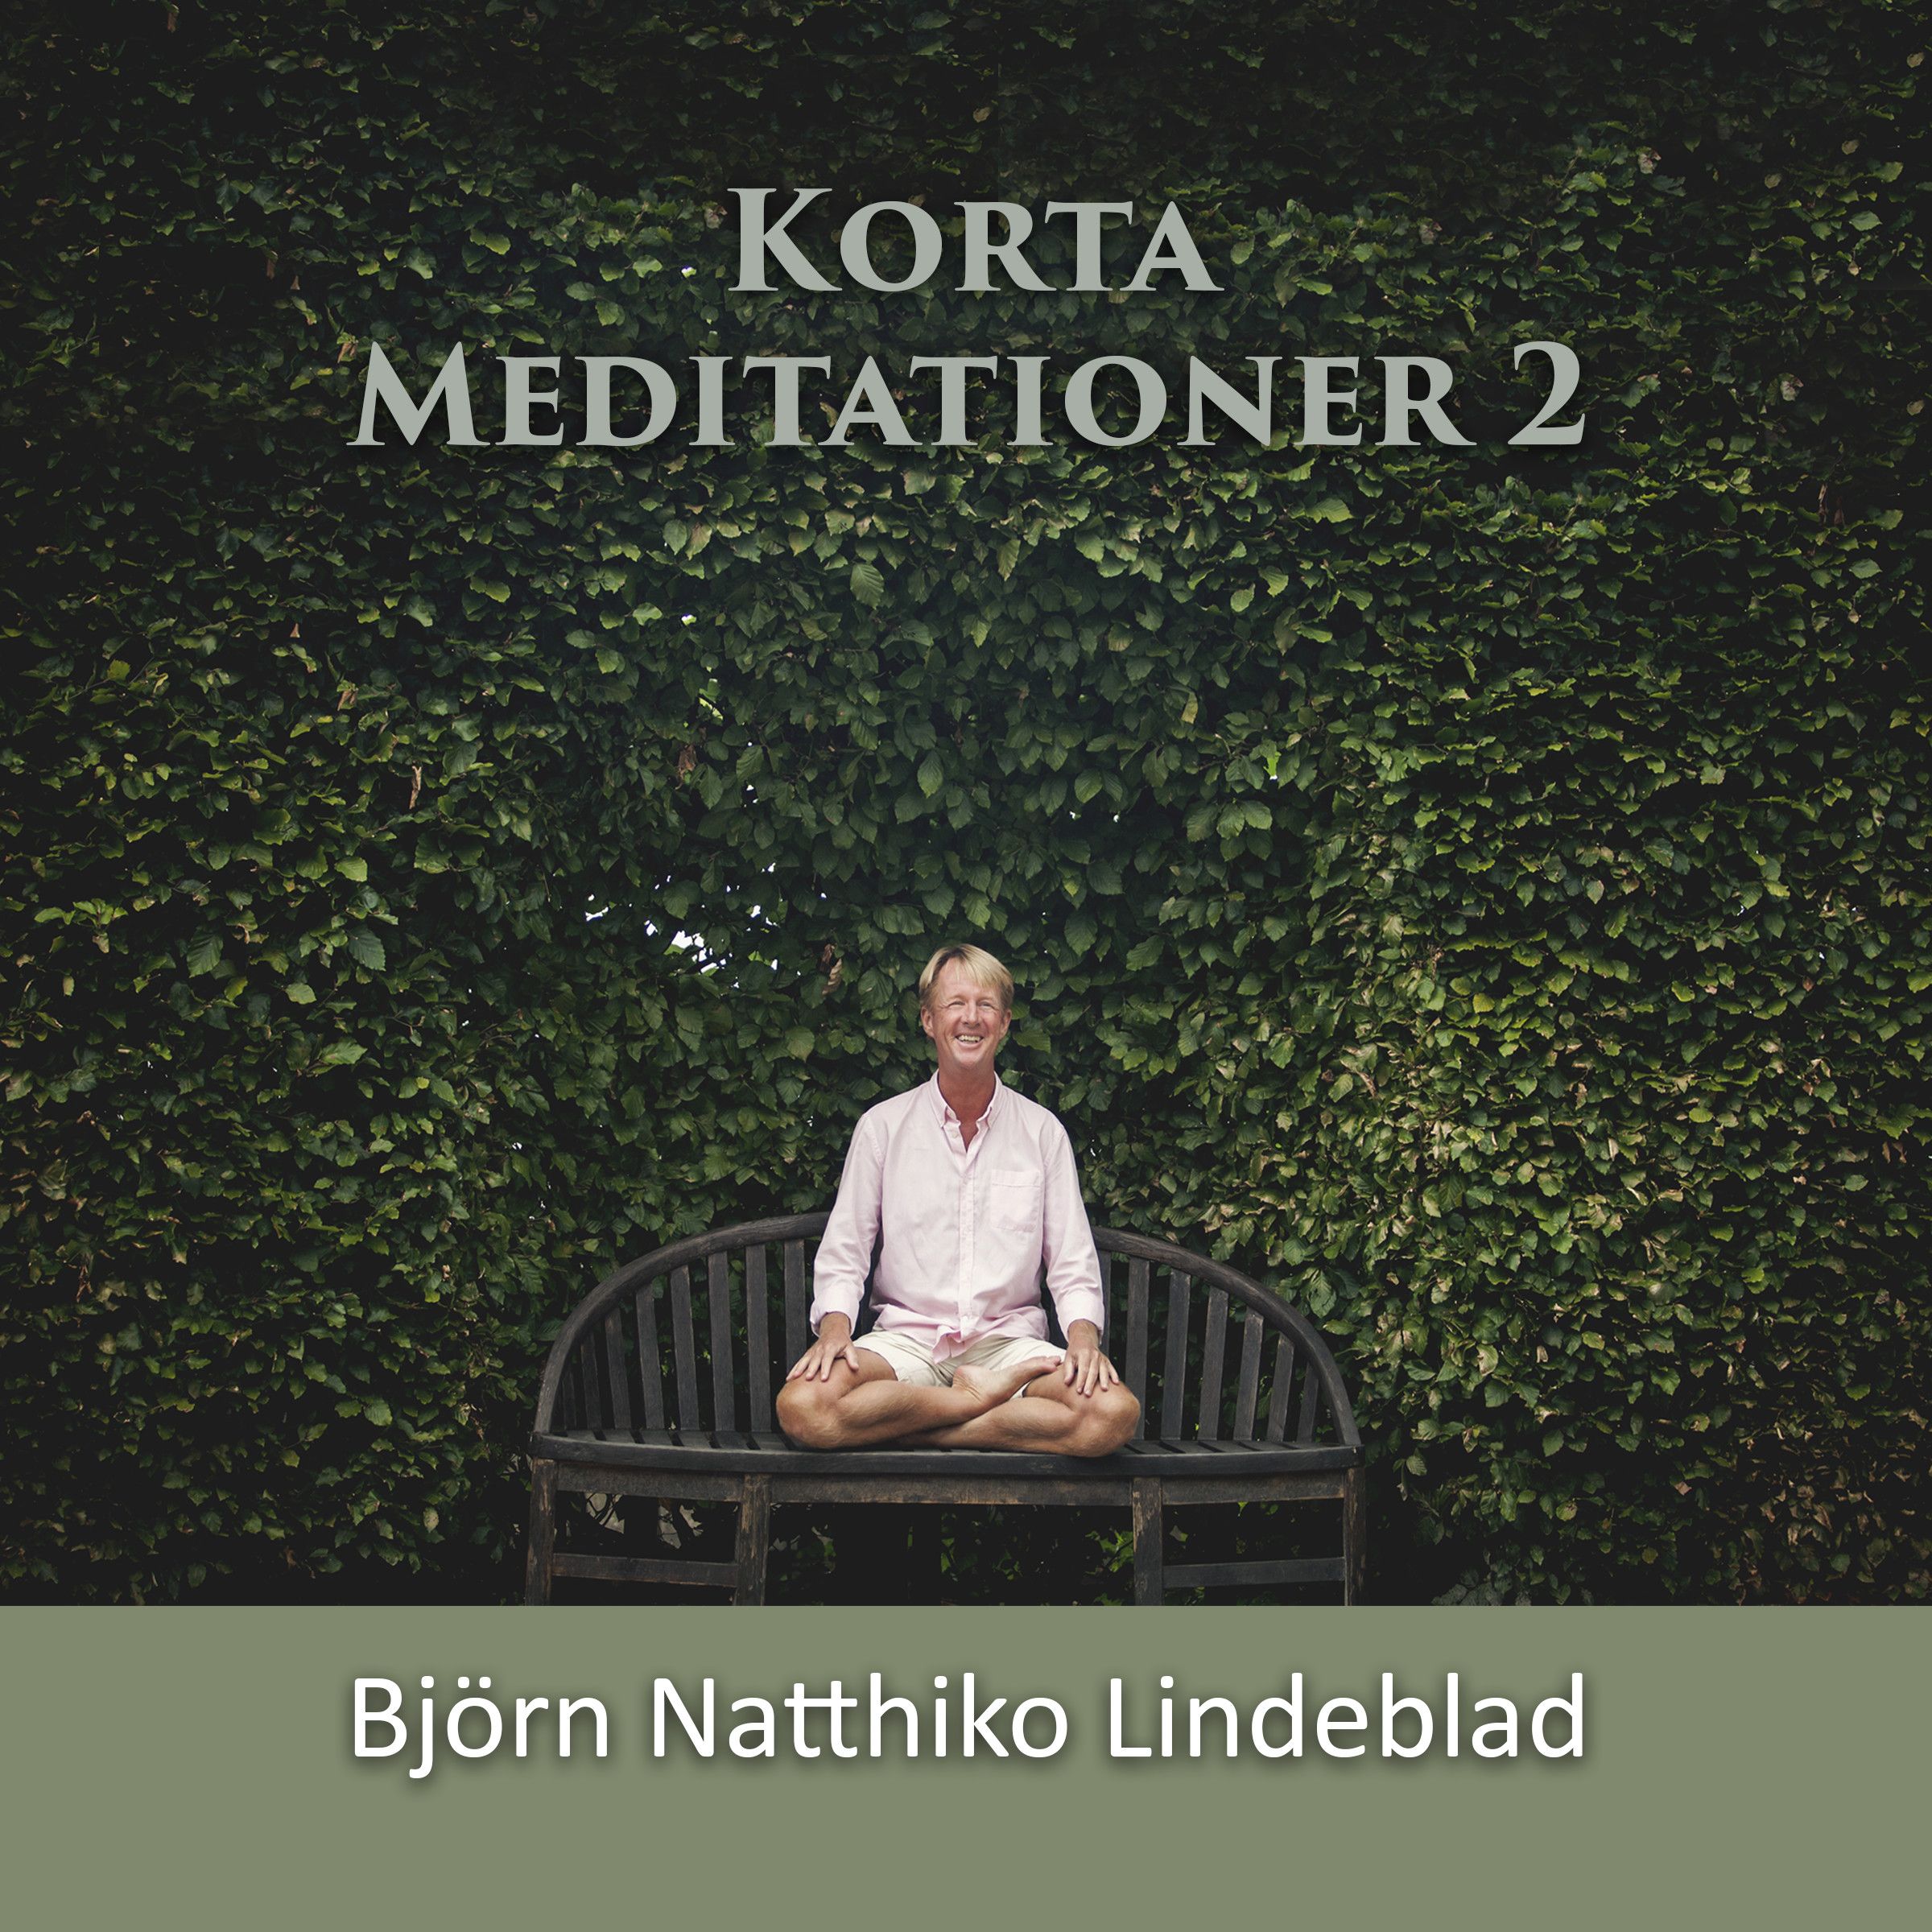 Korta Meditationer 2, audiobook by Björn Natthiko Lindeblad